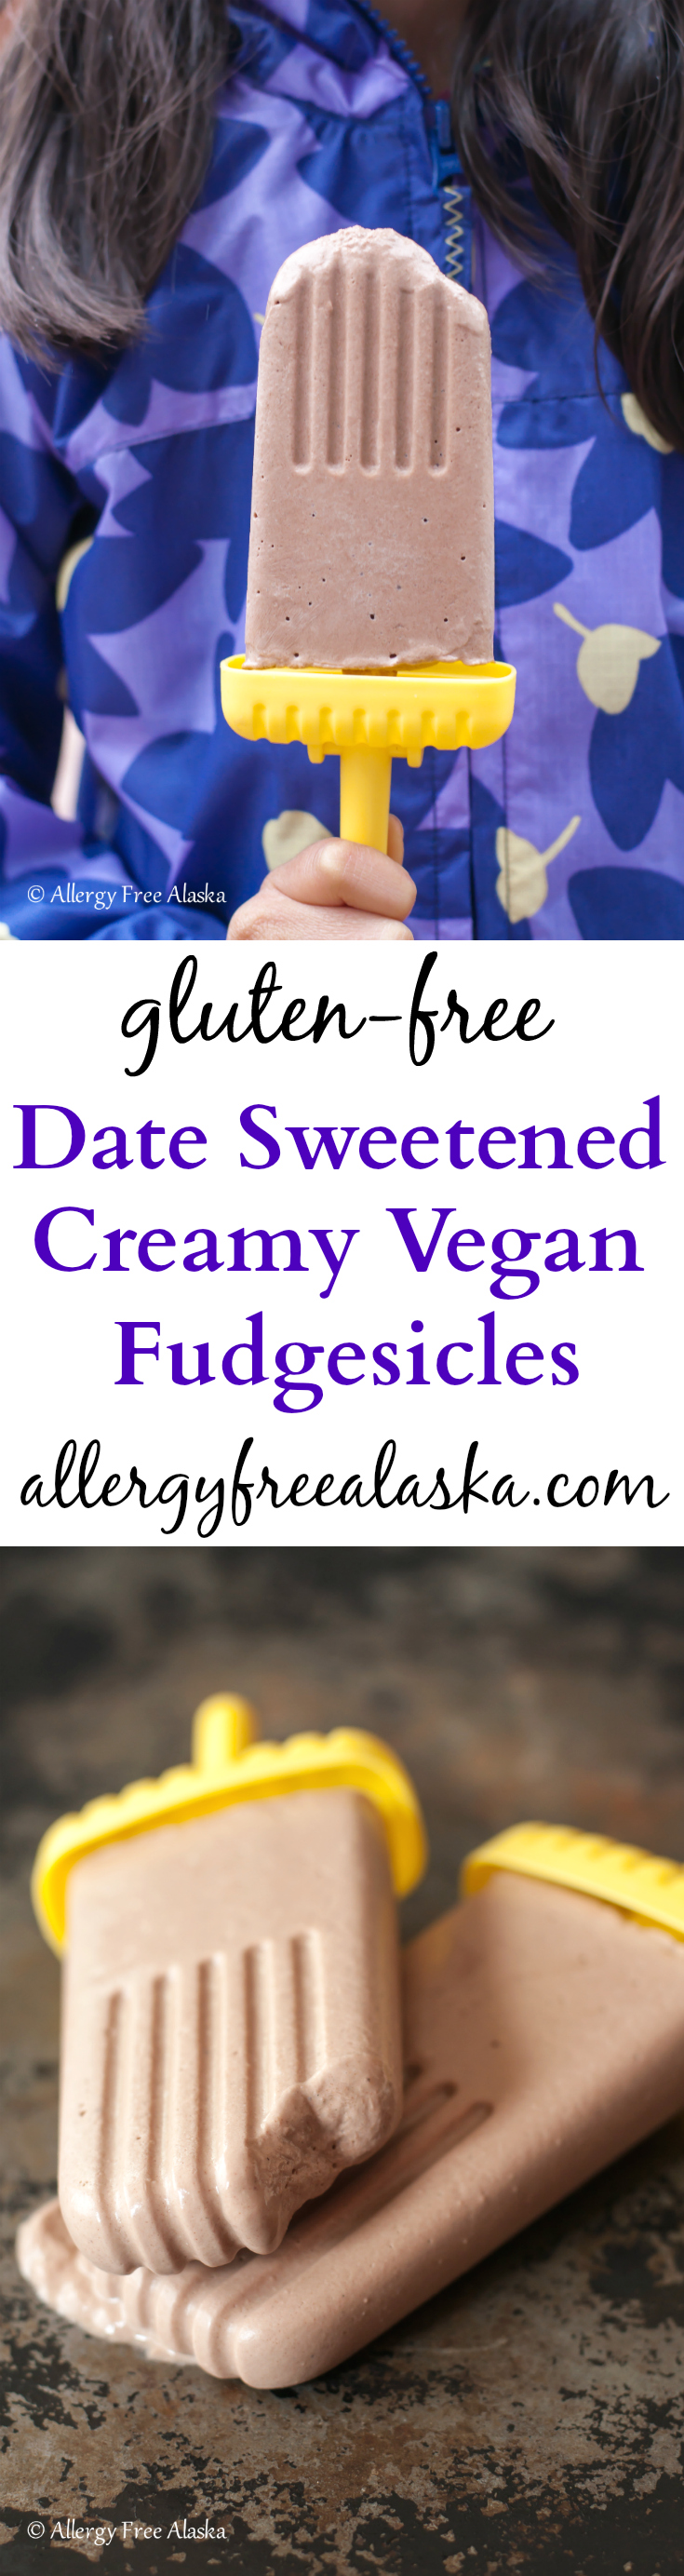 Date Sweetened Creamy Vegan Fudgesicles Recipe - from Allergy Free Alaska